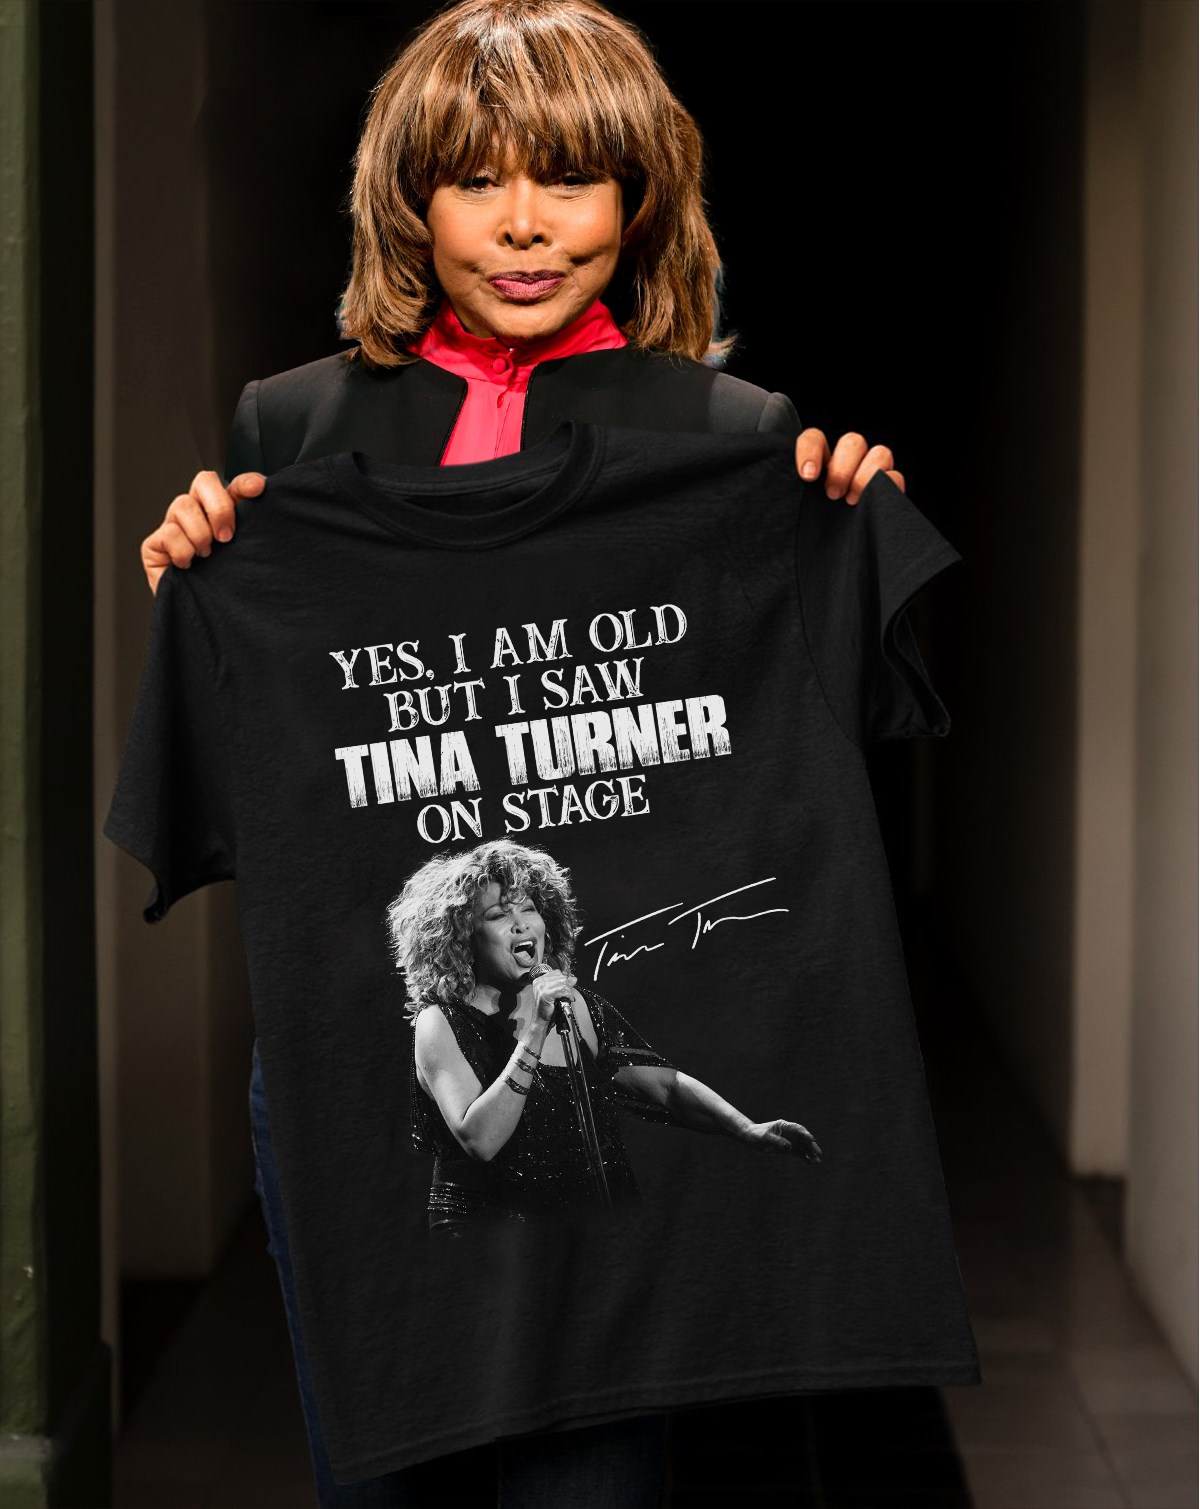 Yes I am old but I saw Tina Turner on stage - Tina Turner singer